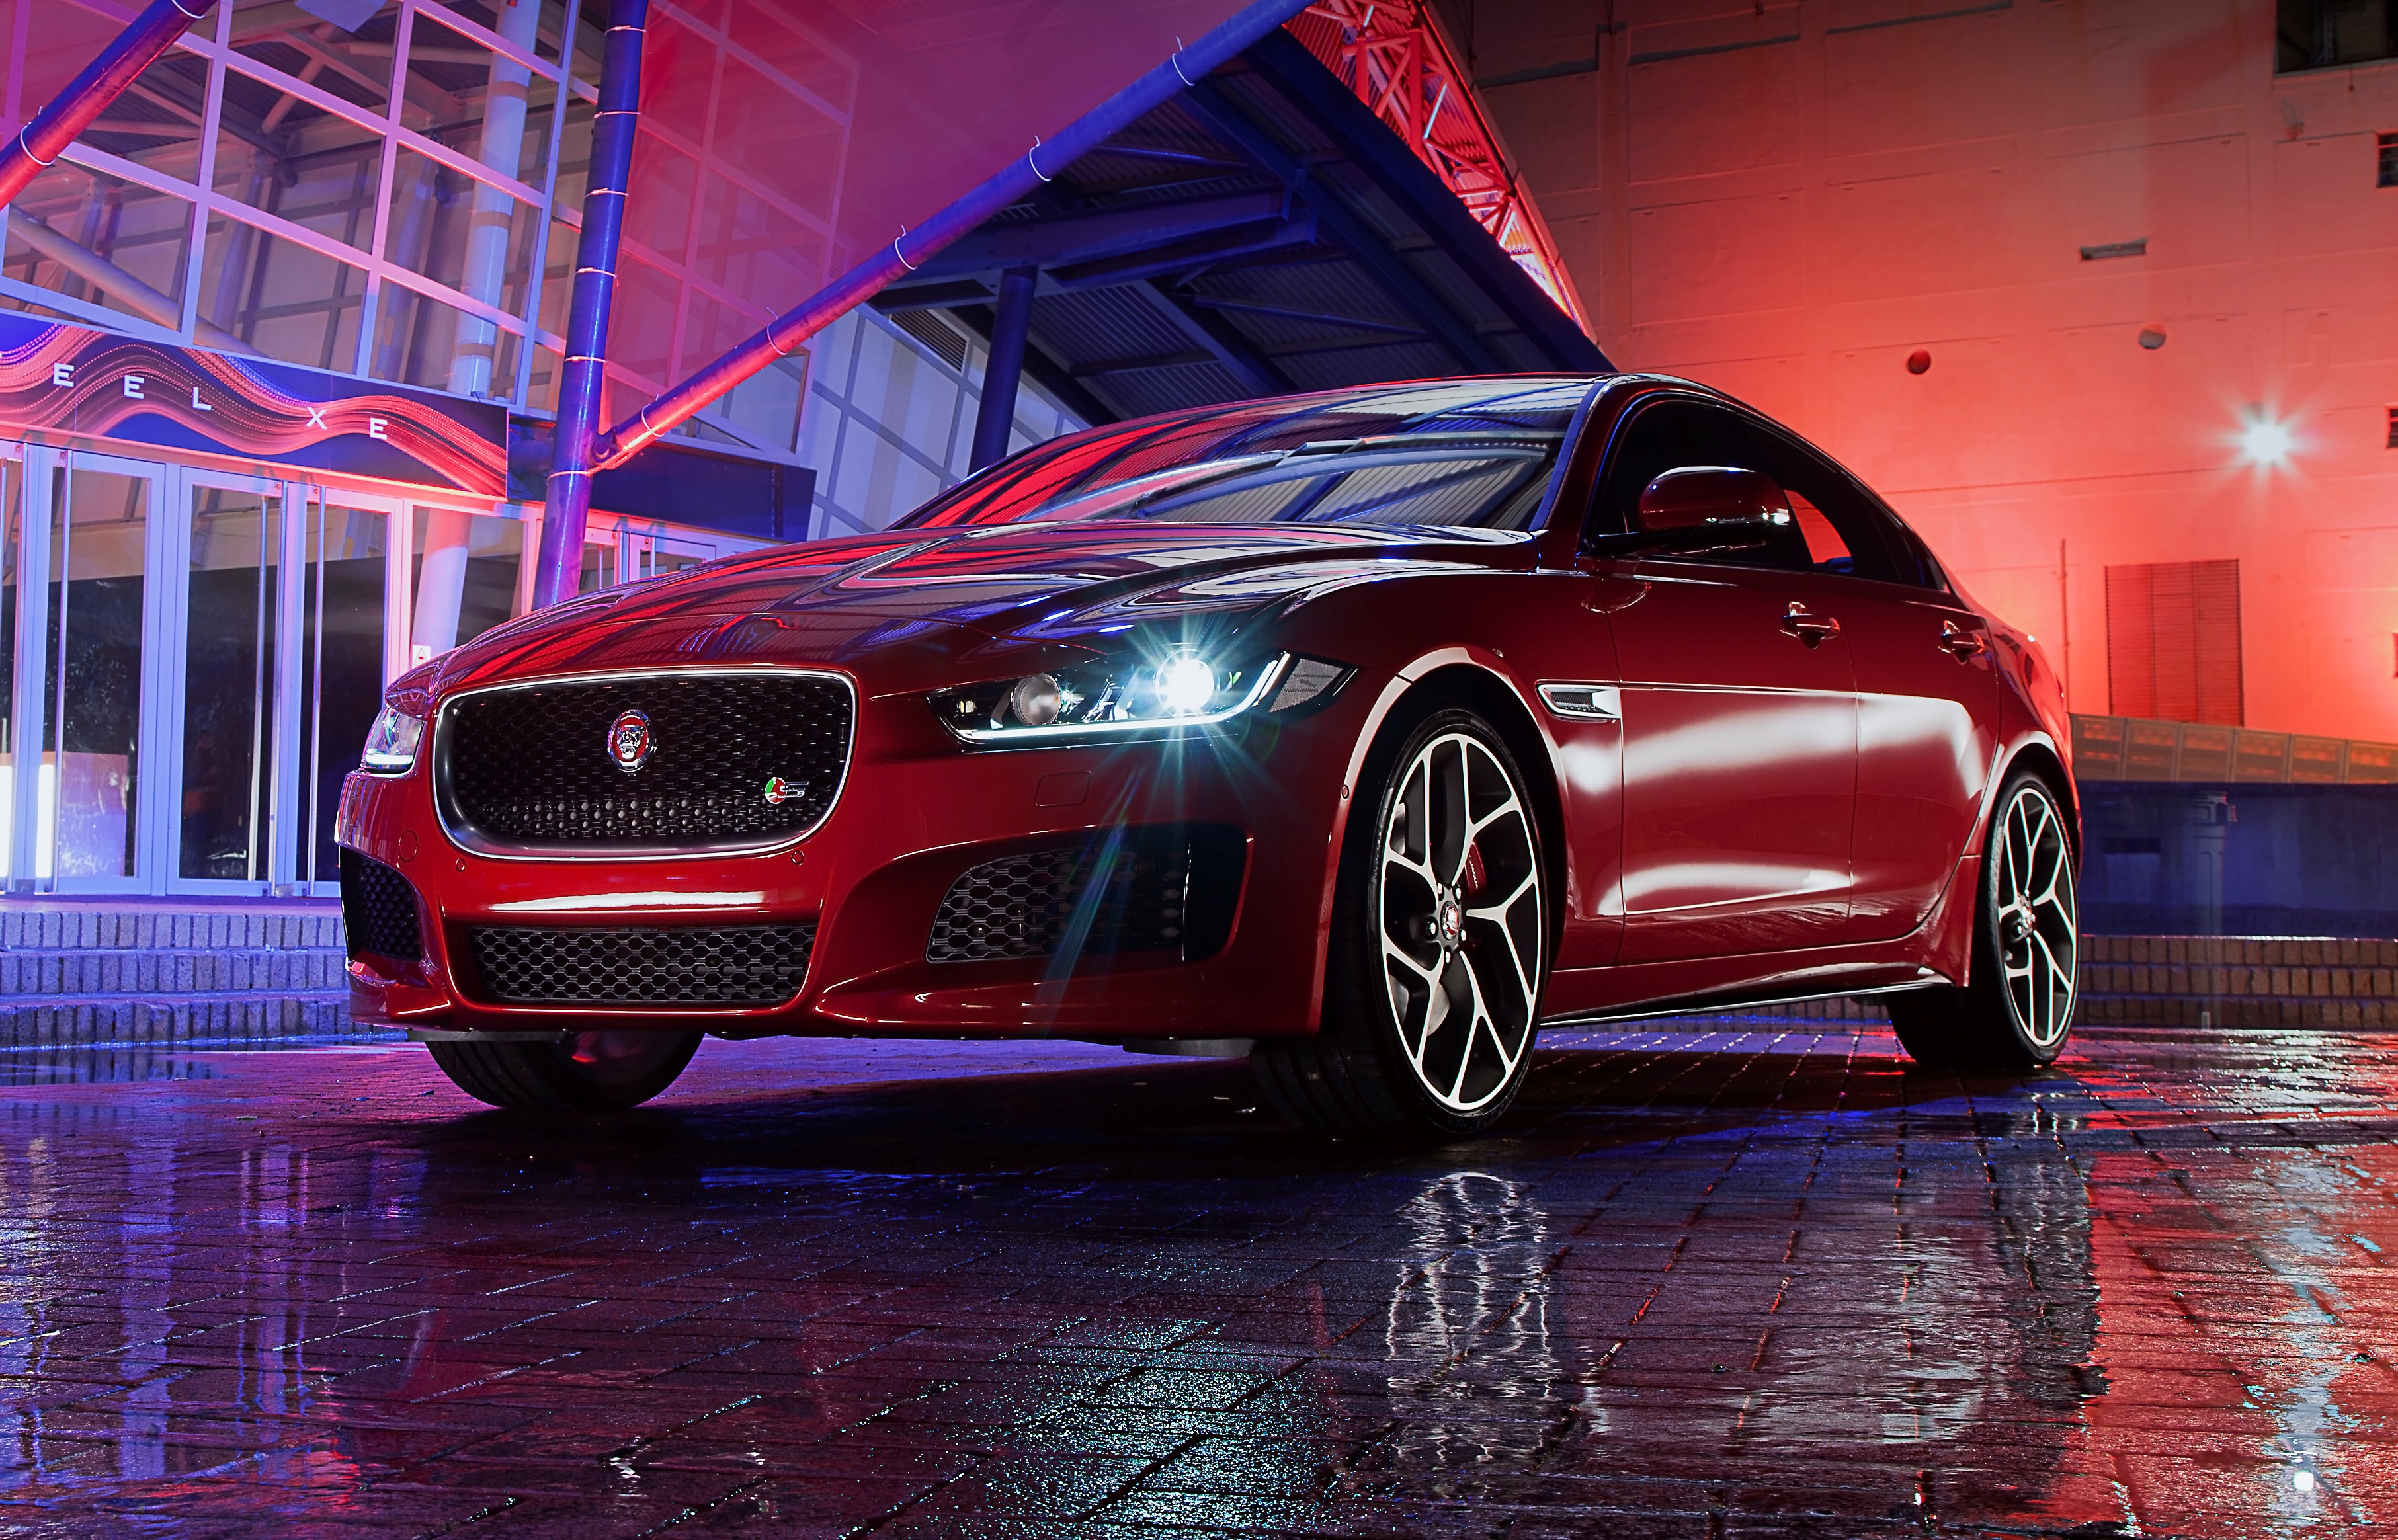 Jaguar has Revealed the New 2015 XE